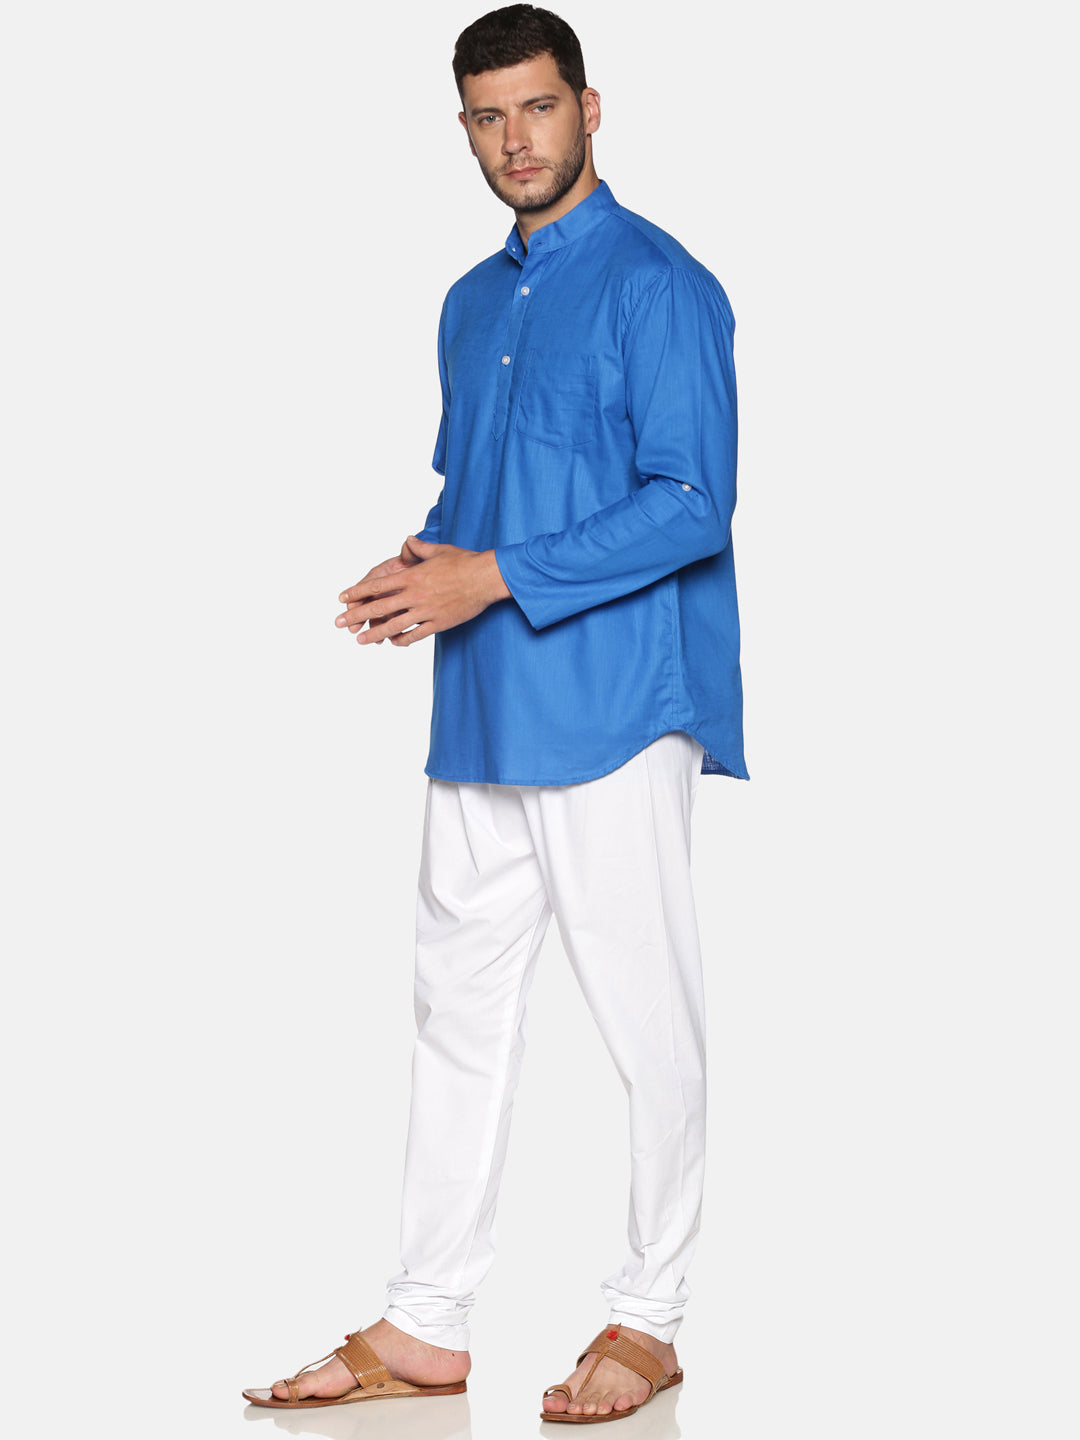 Men Blue Colour Cotton Kurta Pyjama Set.